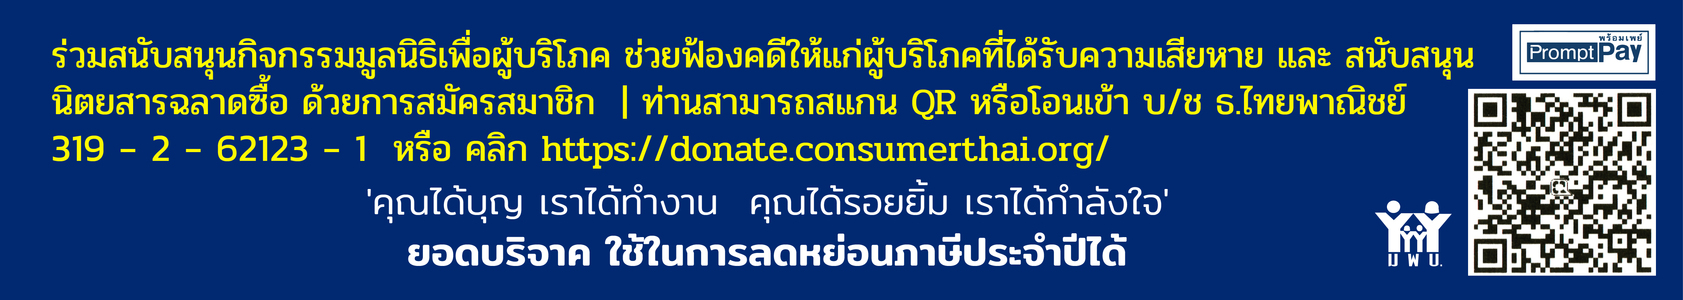 donate consumerthai banner